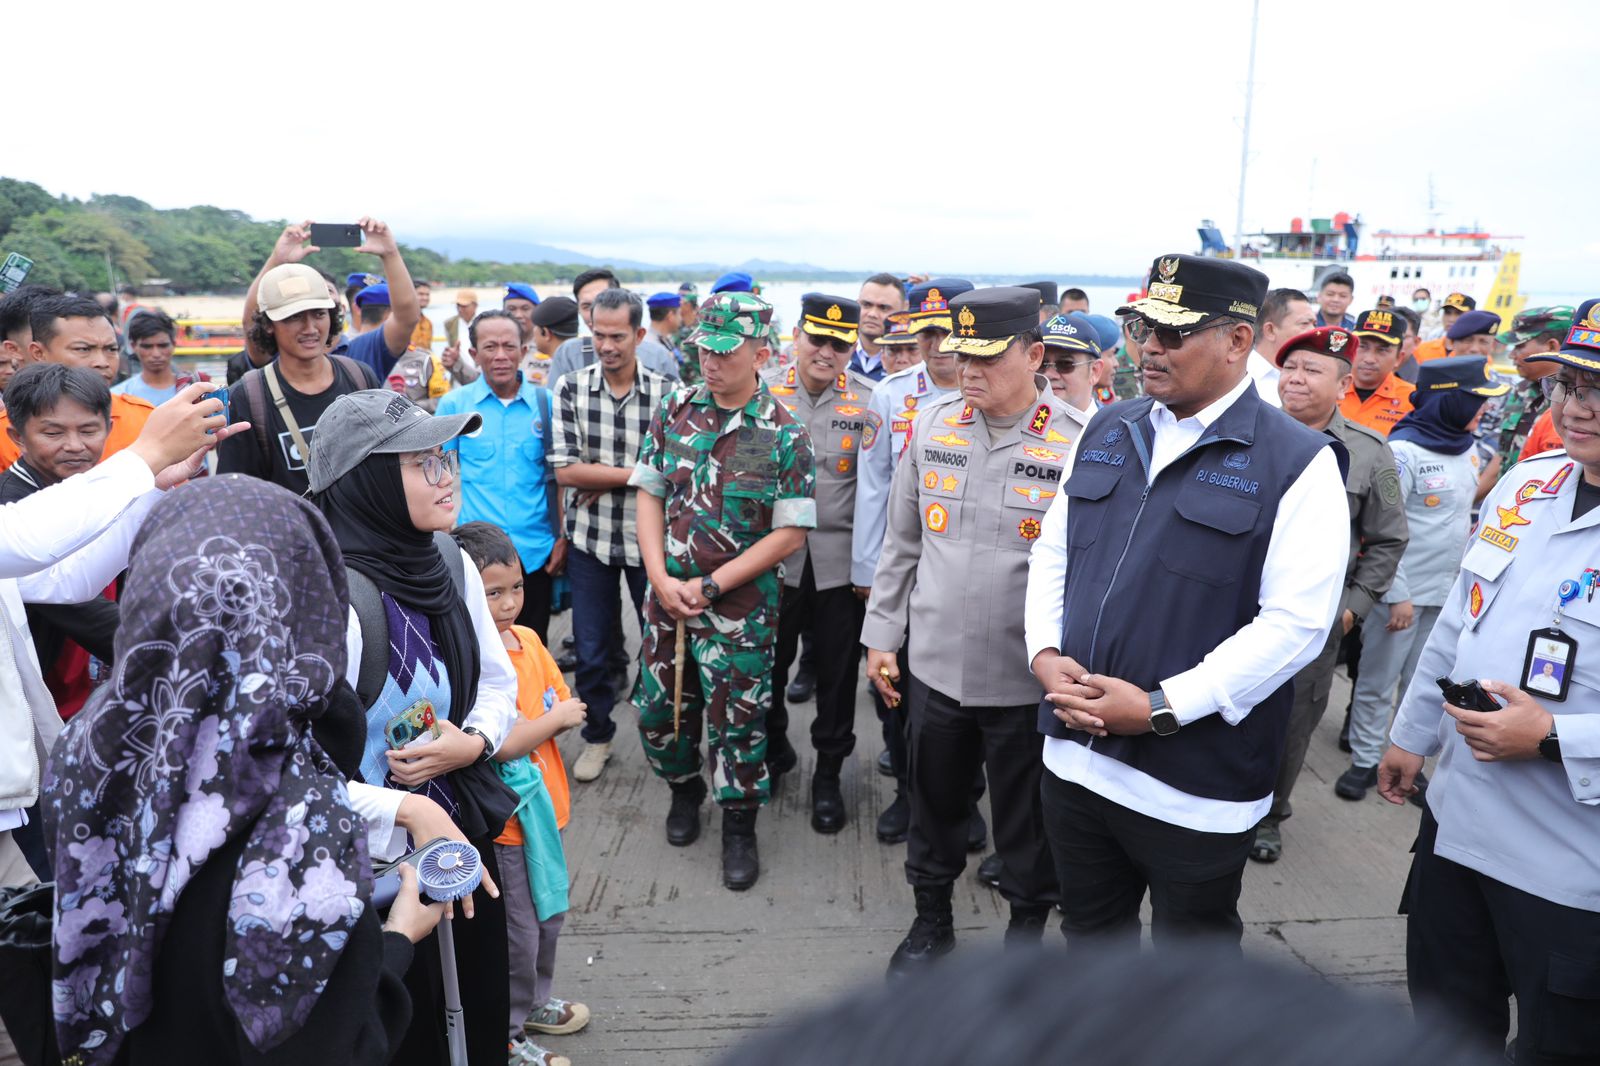 Jelang Lebaran, Pj Gubernur Bersama Forkopimda Tinjau Pelabuhan Tanjung Kalian Pastikan Kelancaran Arus Mudik